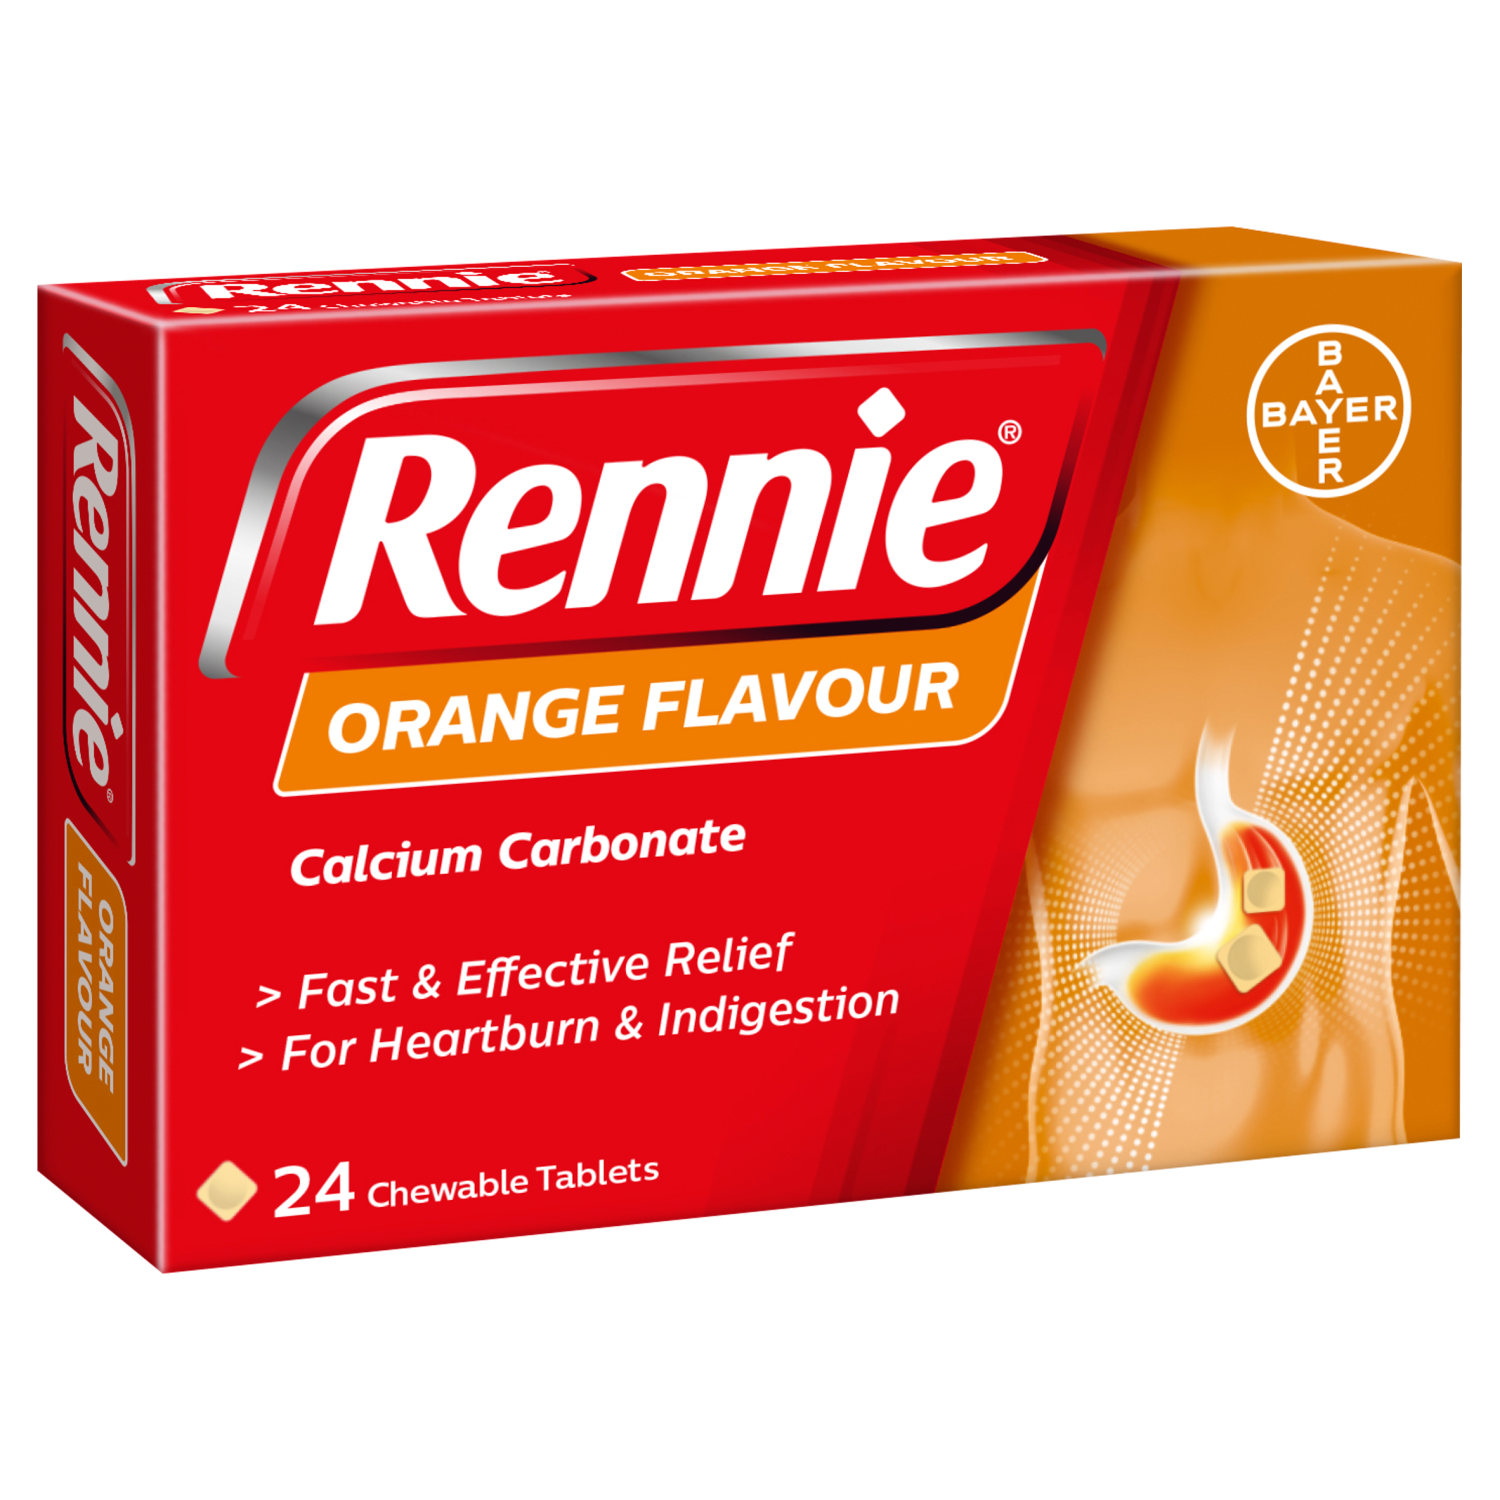 Rennie Orange Flavour 24 Chewable Tablets